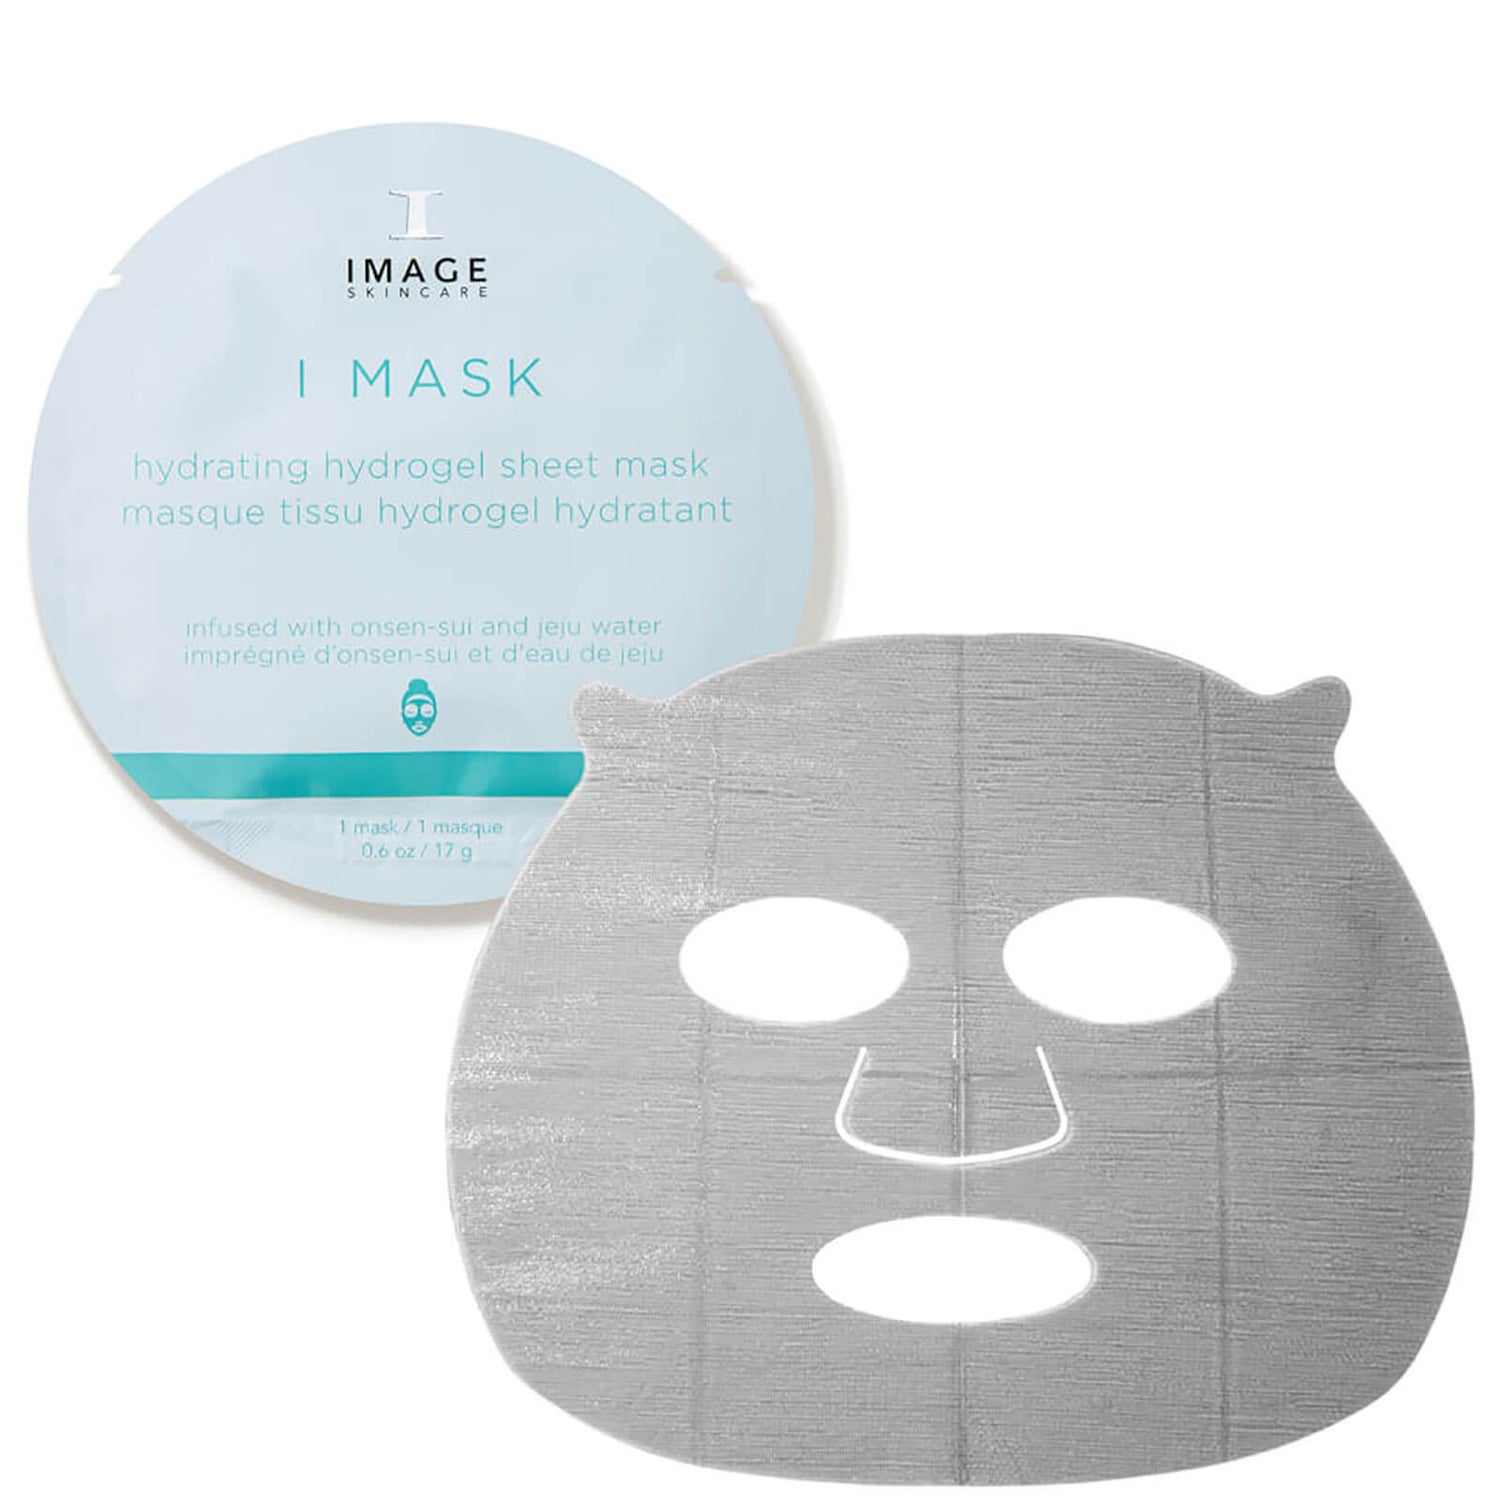 Image Skincare гидрогелевая маска. Image Mask Biomolecular Hydrating маска гидрогелевая. Image Skincare i Mask Hydrating Hydrogel Sheet Mask Backbar. Missha 3step Hydrating Mask увлажняющая маска.